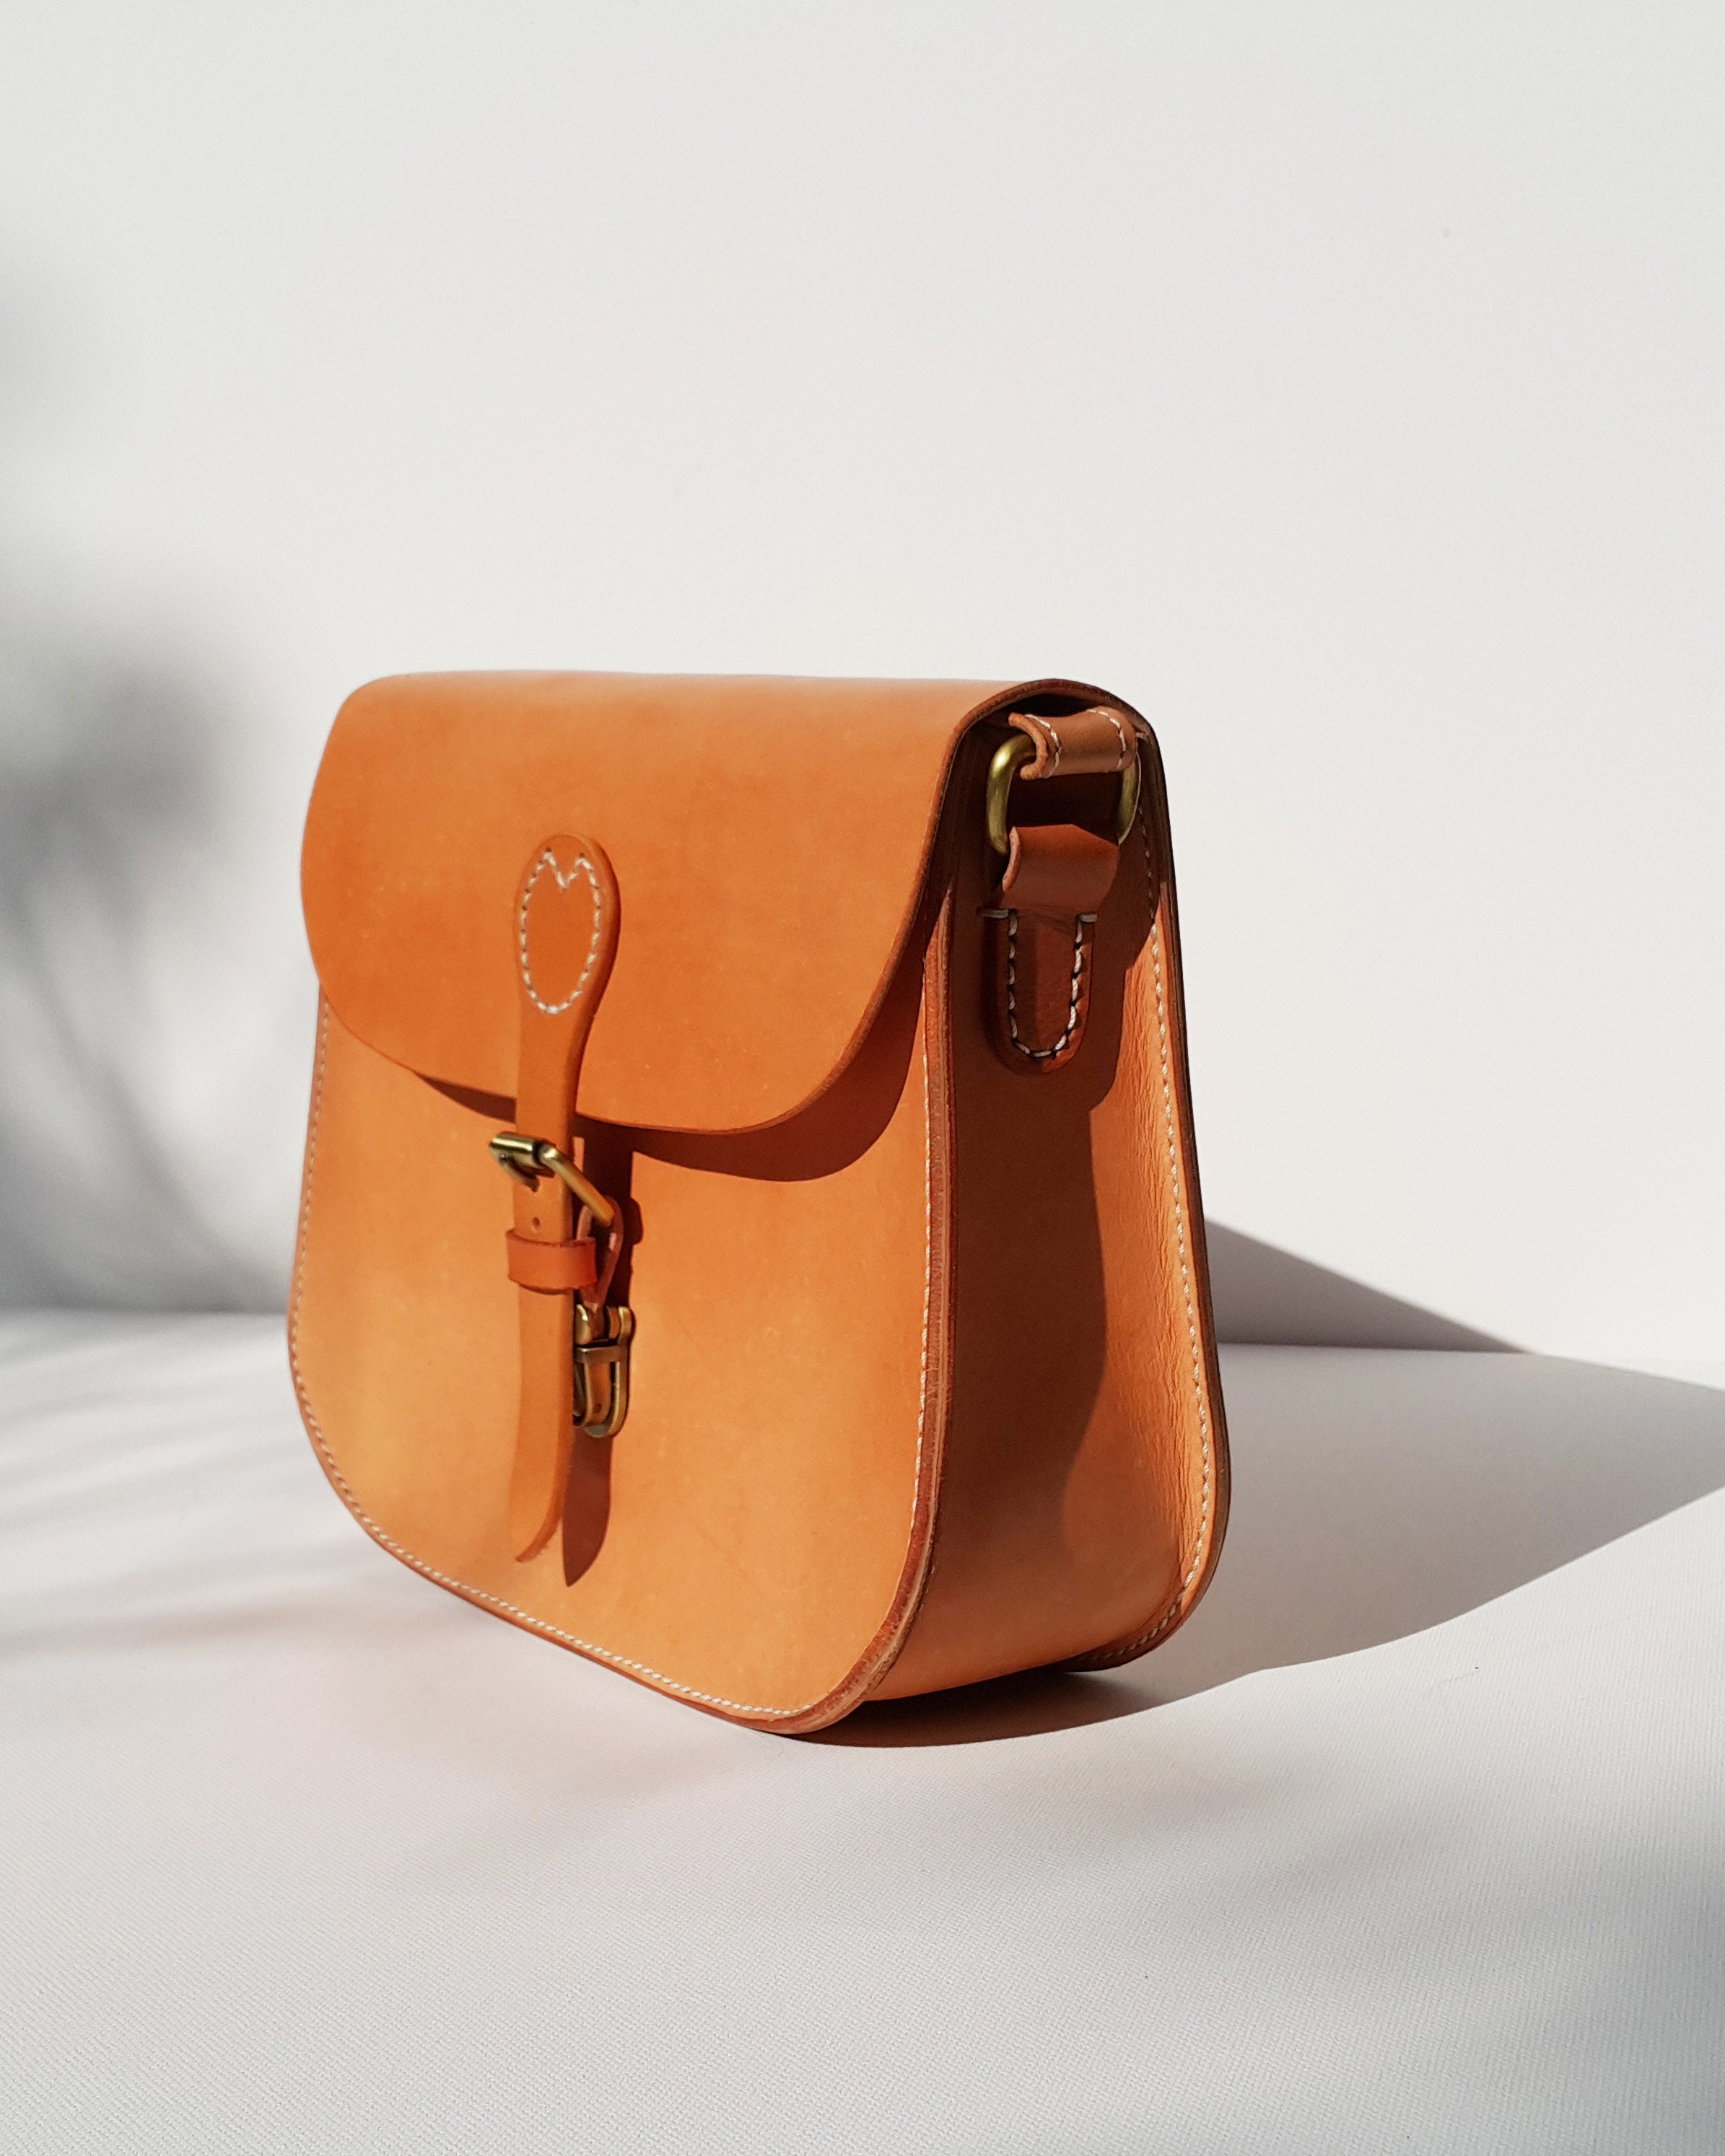 Leather Floral Tan Saddle Bag